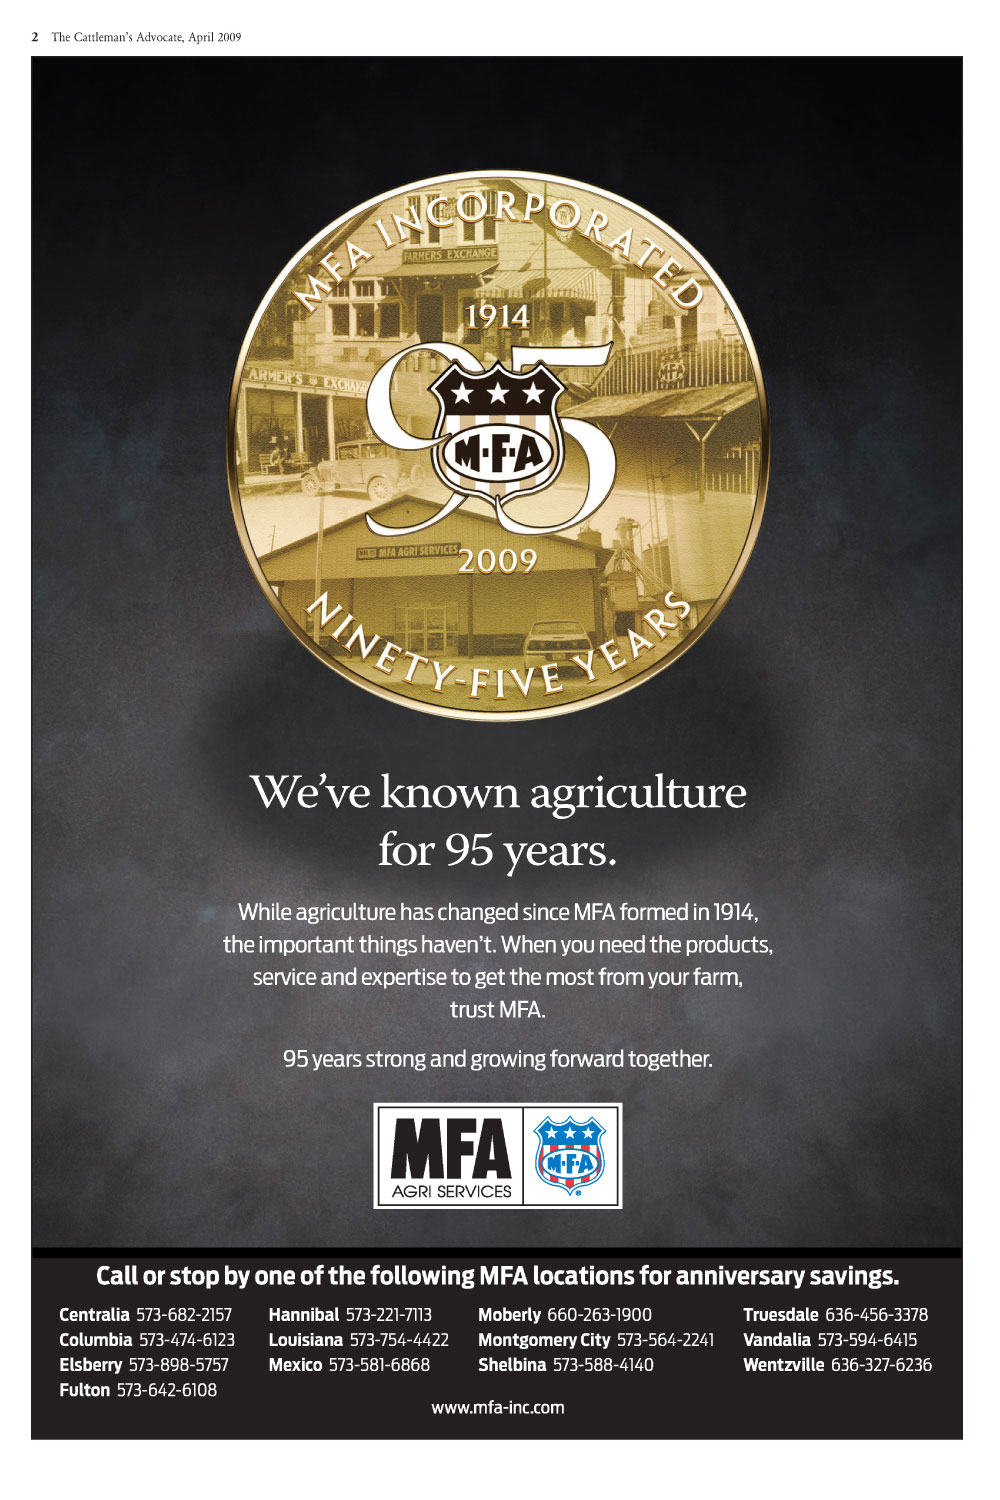 MFA Agri Services